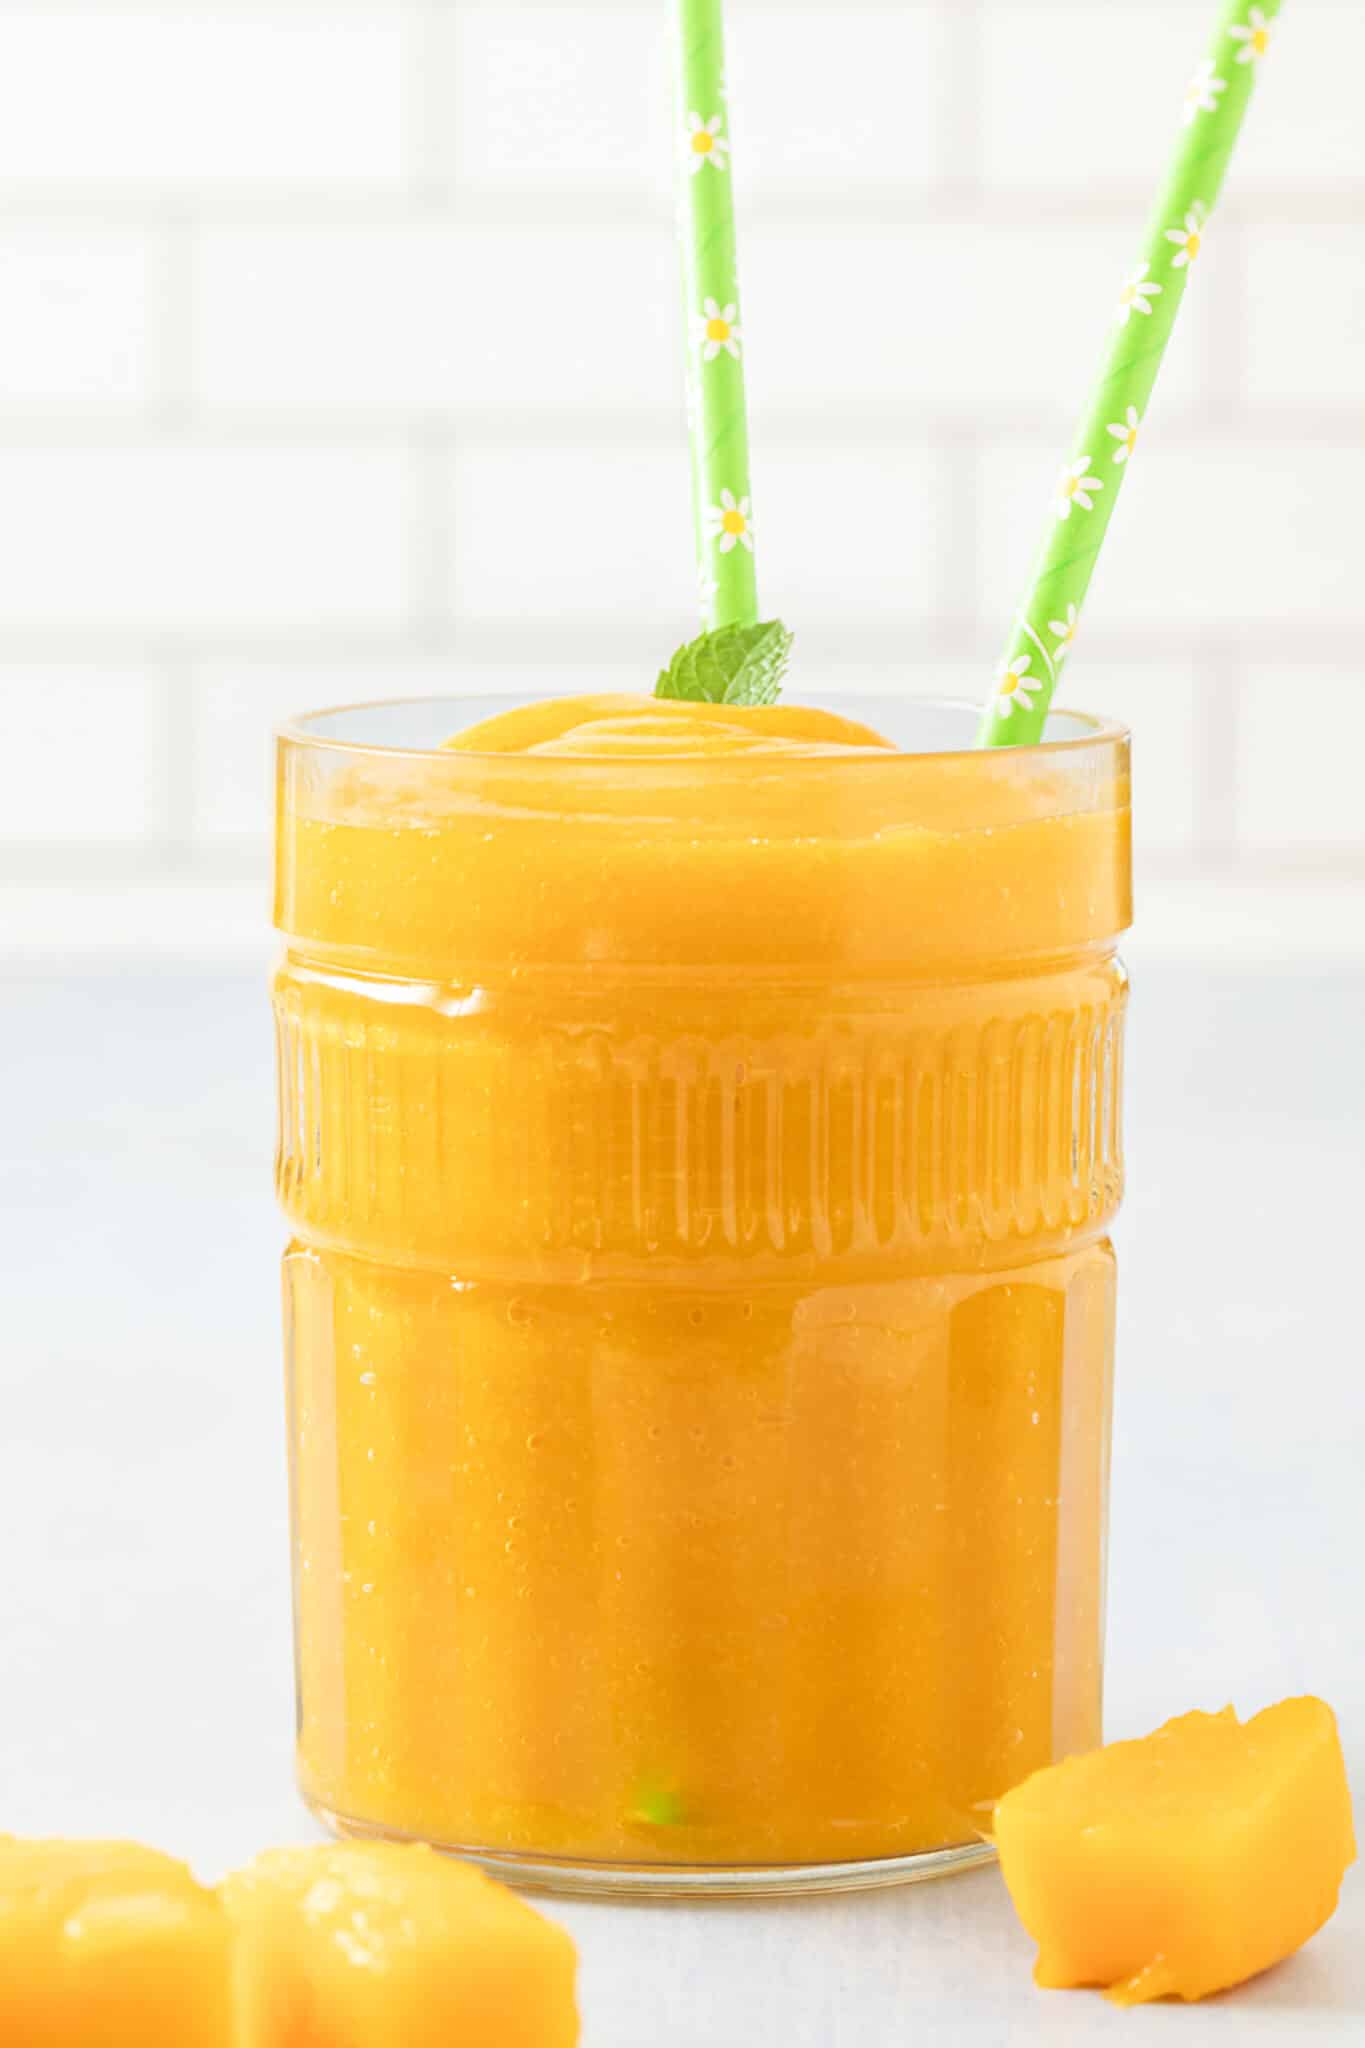 https://www.cleaneatingkitchen.com/wp-content/uploads/2022/08/mango-juice-glass-hero-scaled.jpg